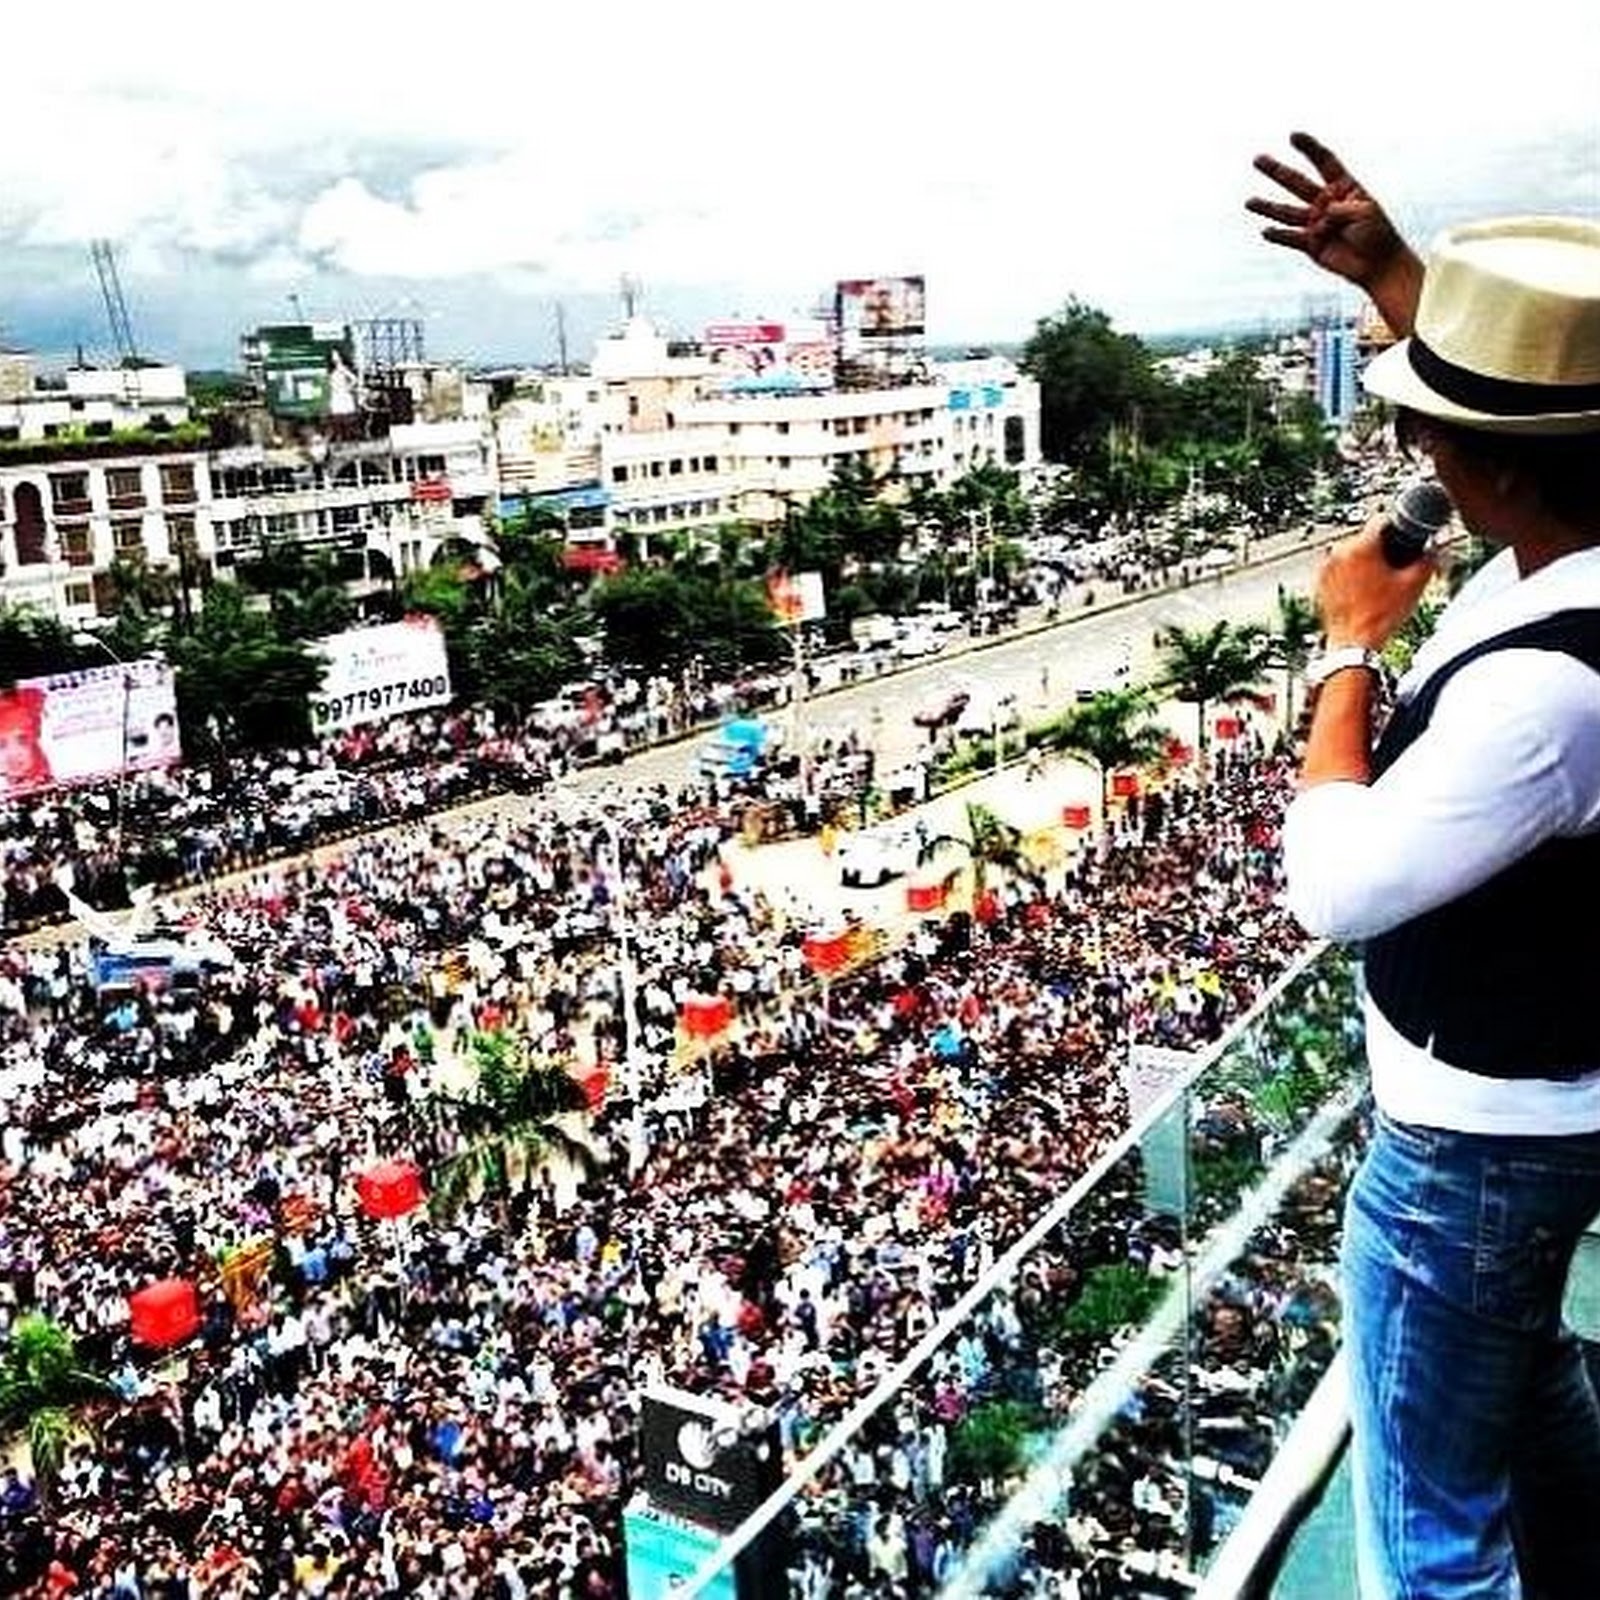 Shahrukh Khan in Bhopal Between Crazy Crowd